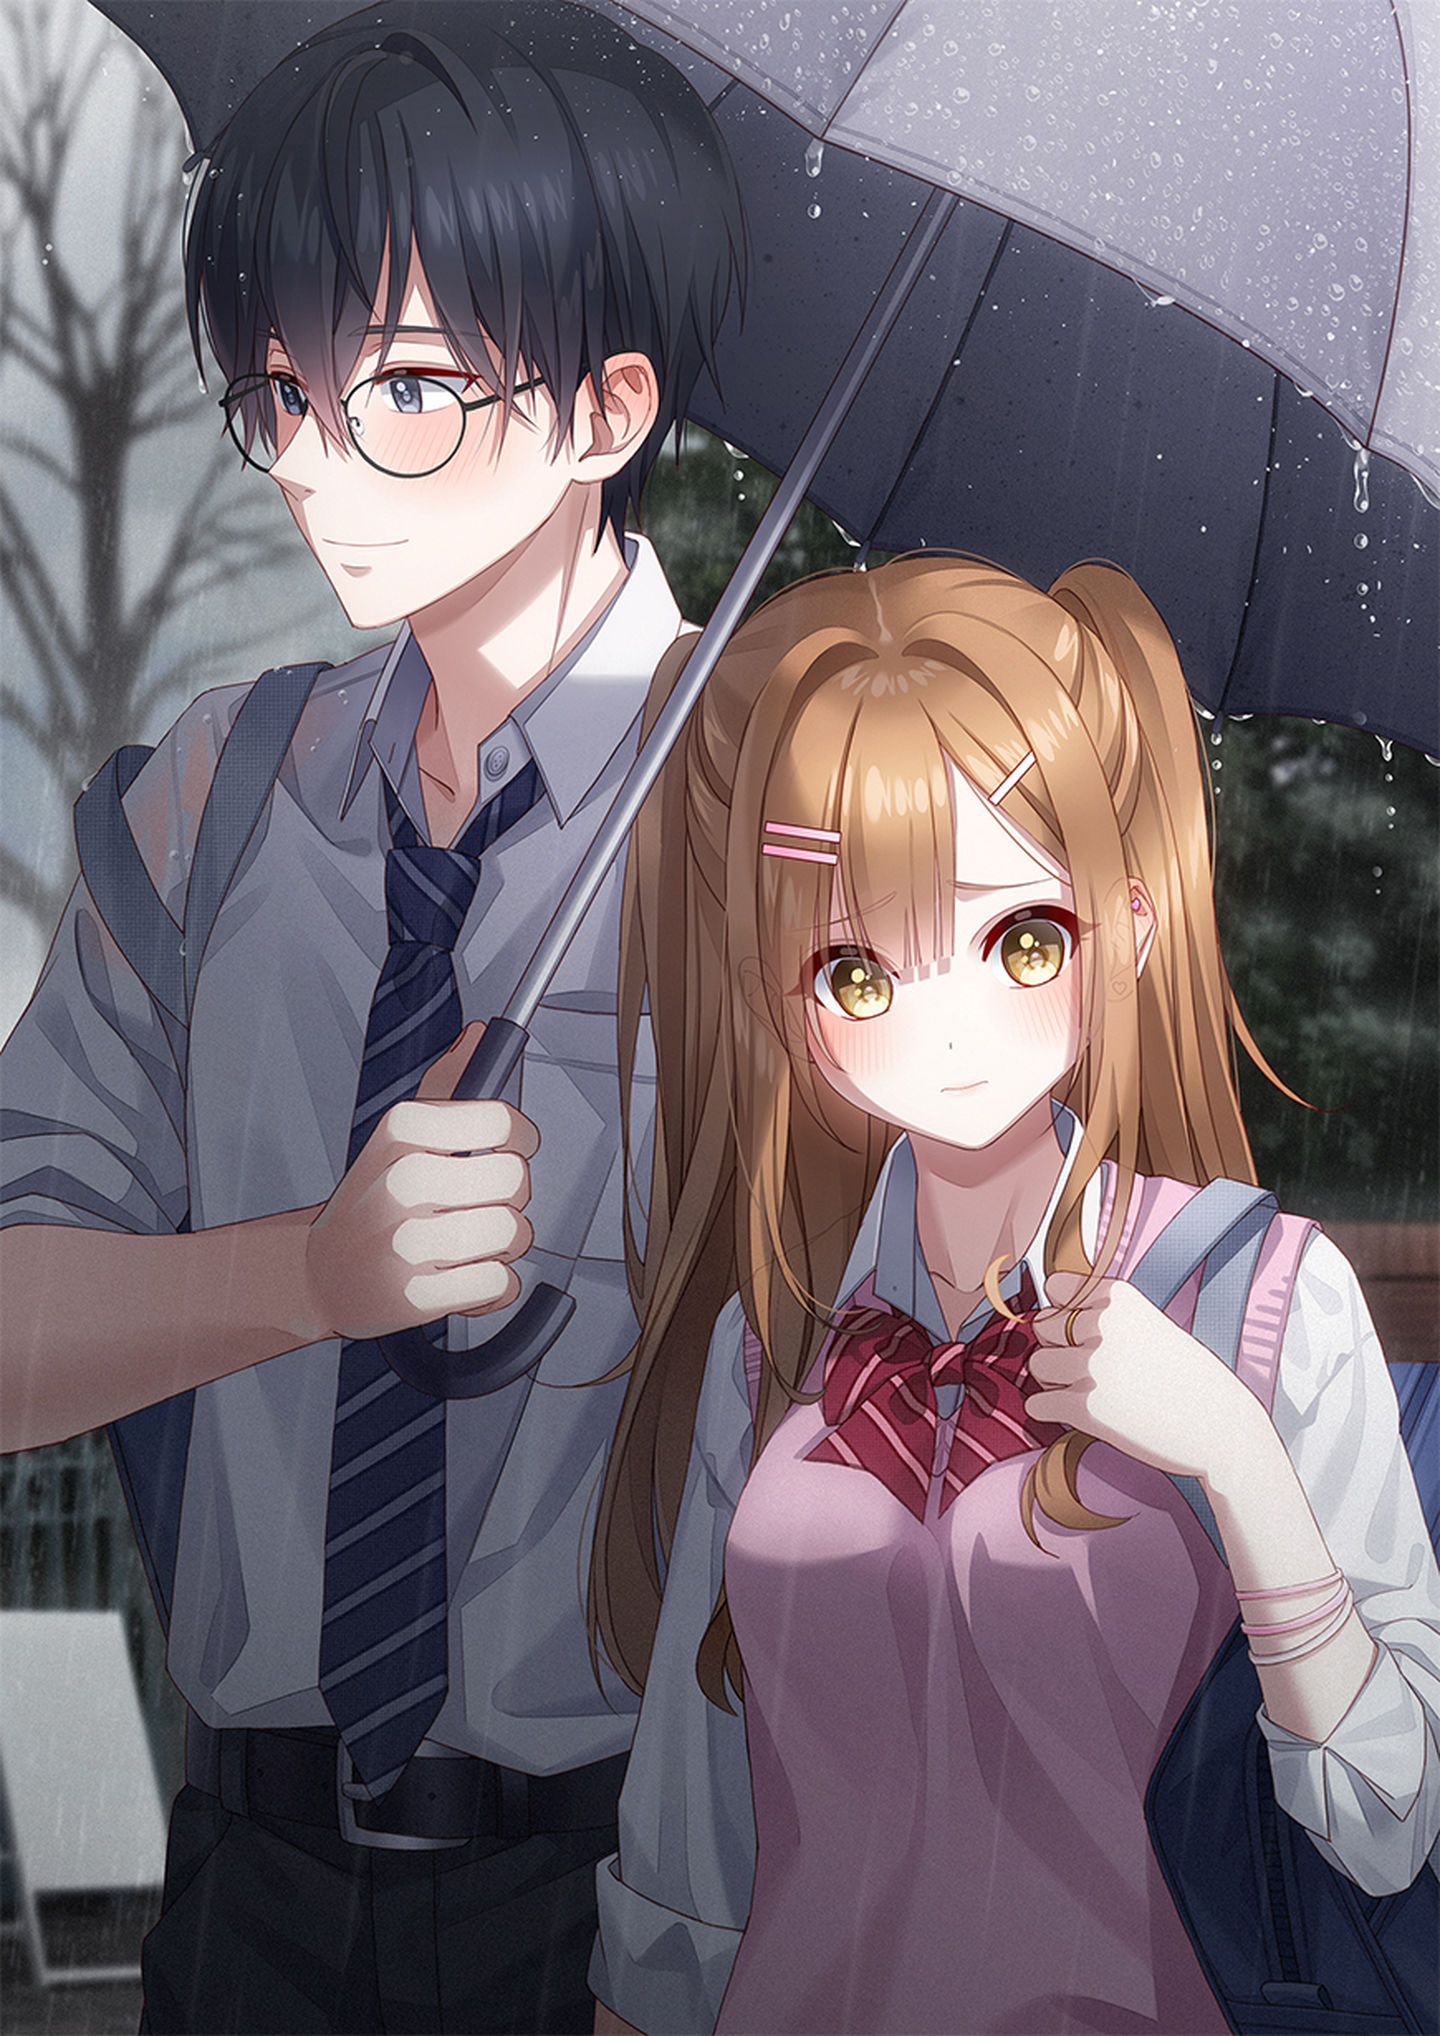 Anime 1440x2036 anime anime boys anime girls UnJem brunette school uniform portrait display umbrella rain